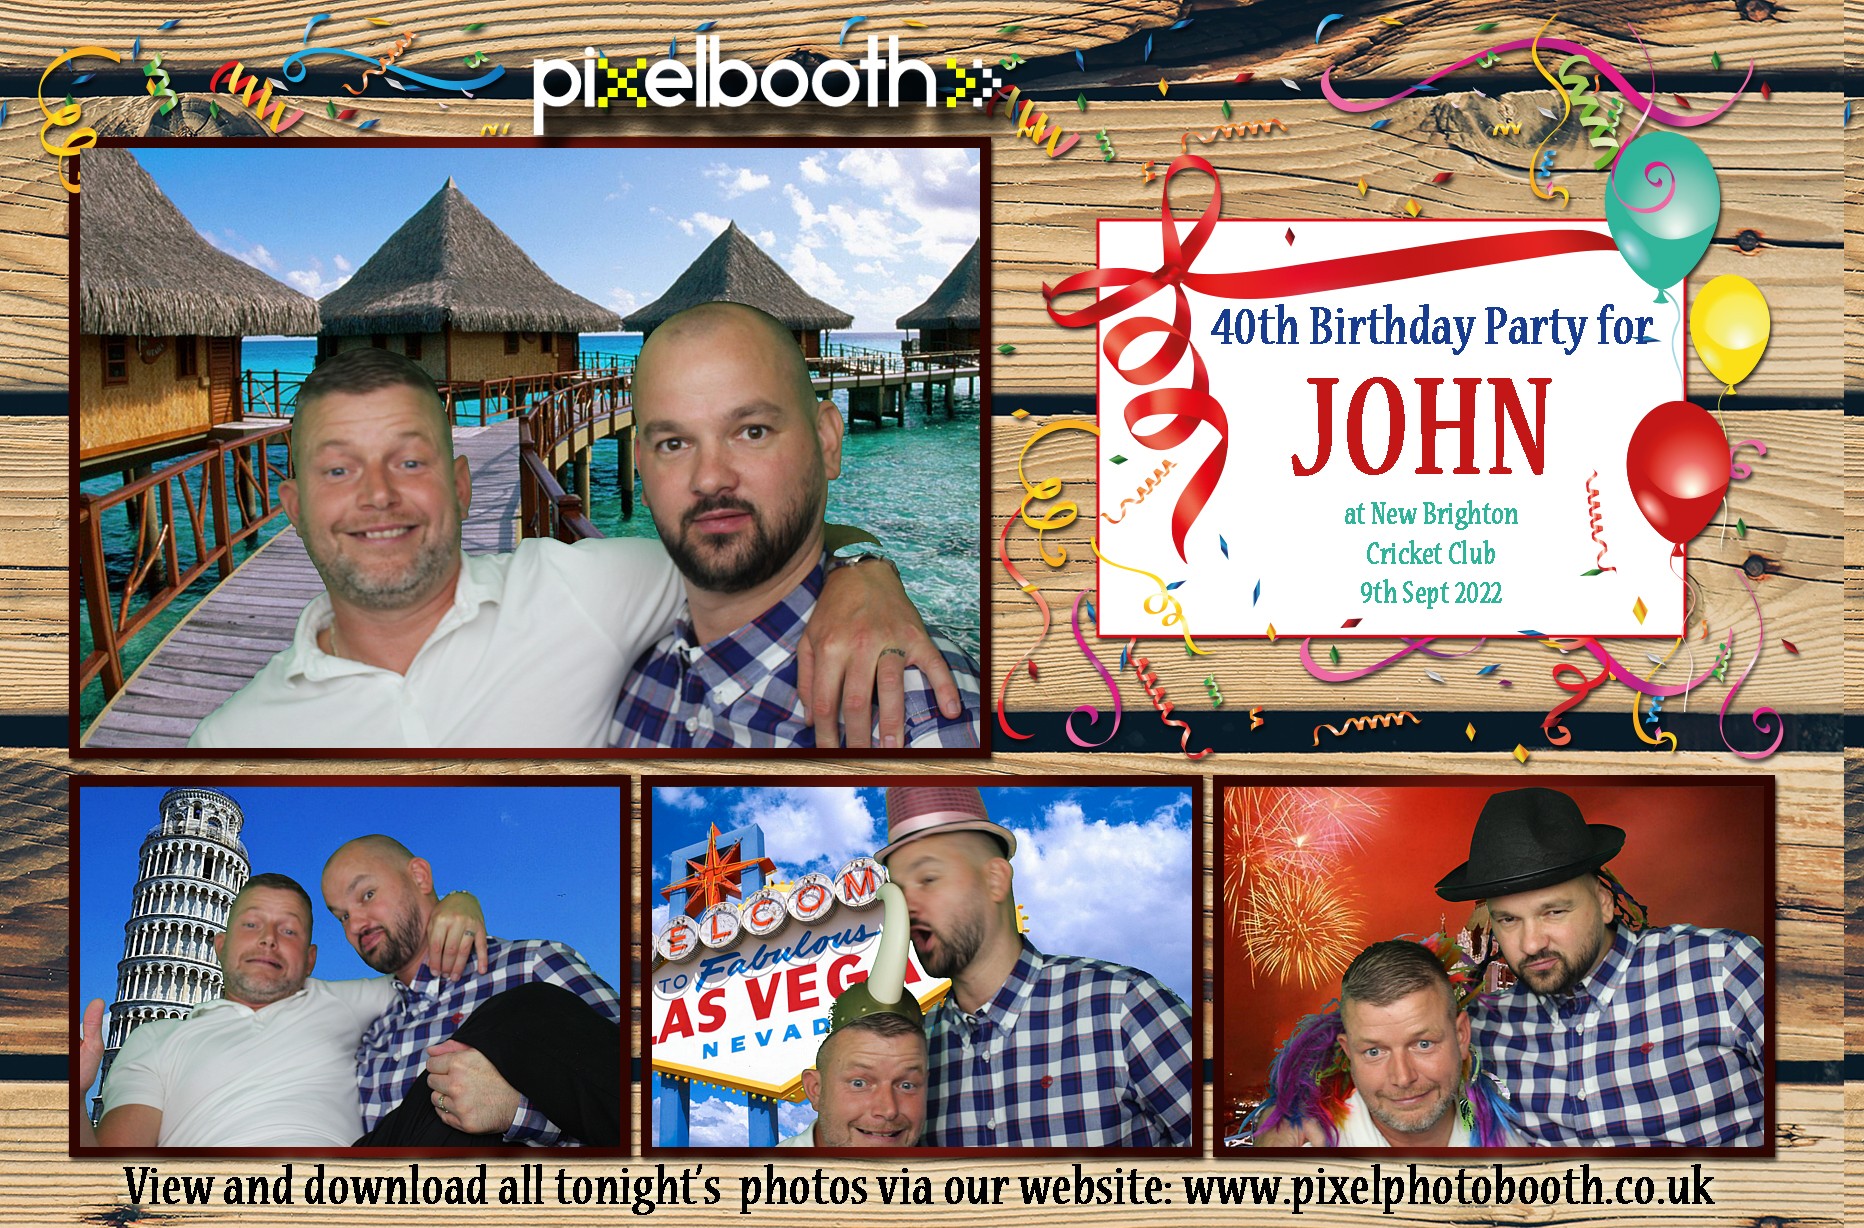 9th Sept 2022: John's 40th Birthday Party